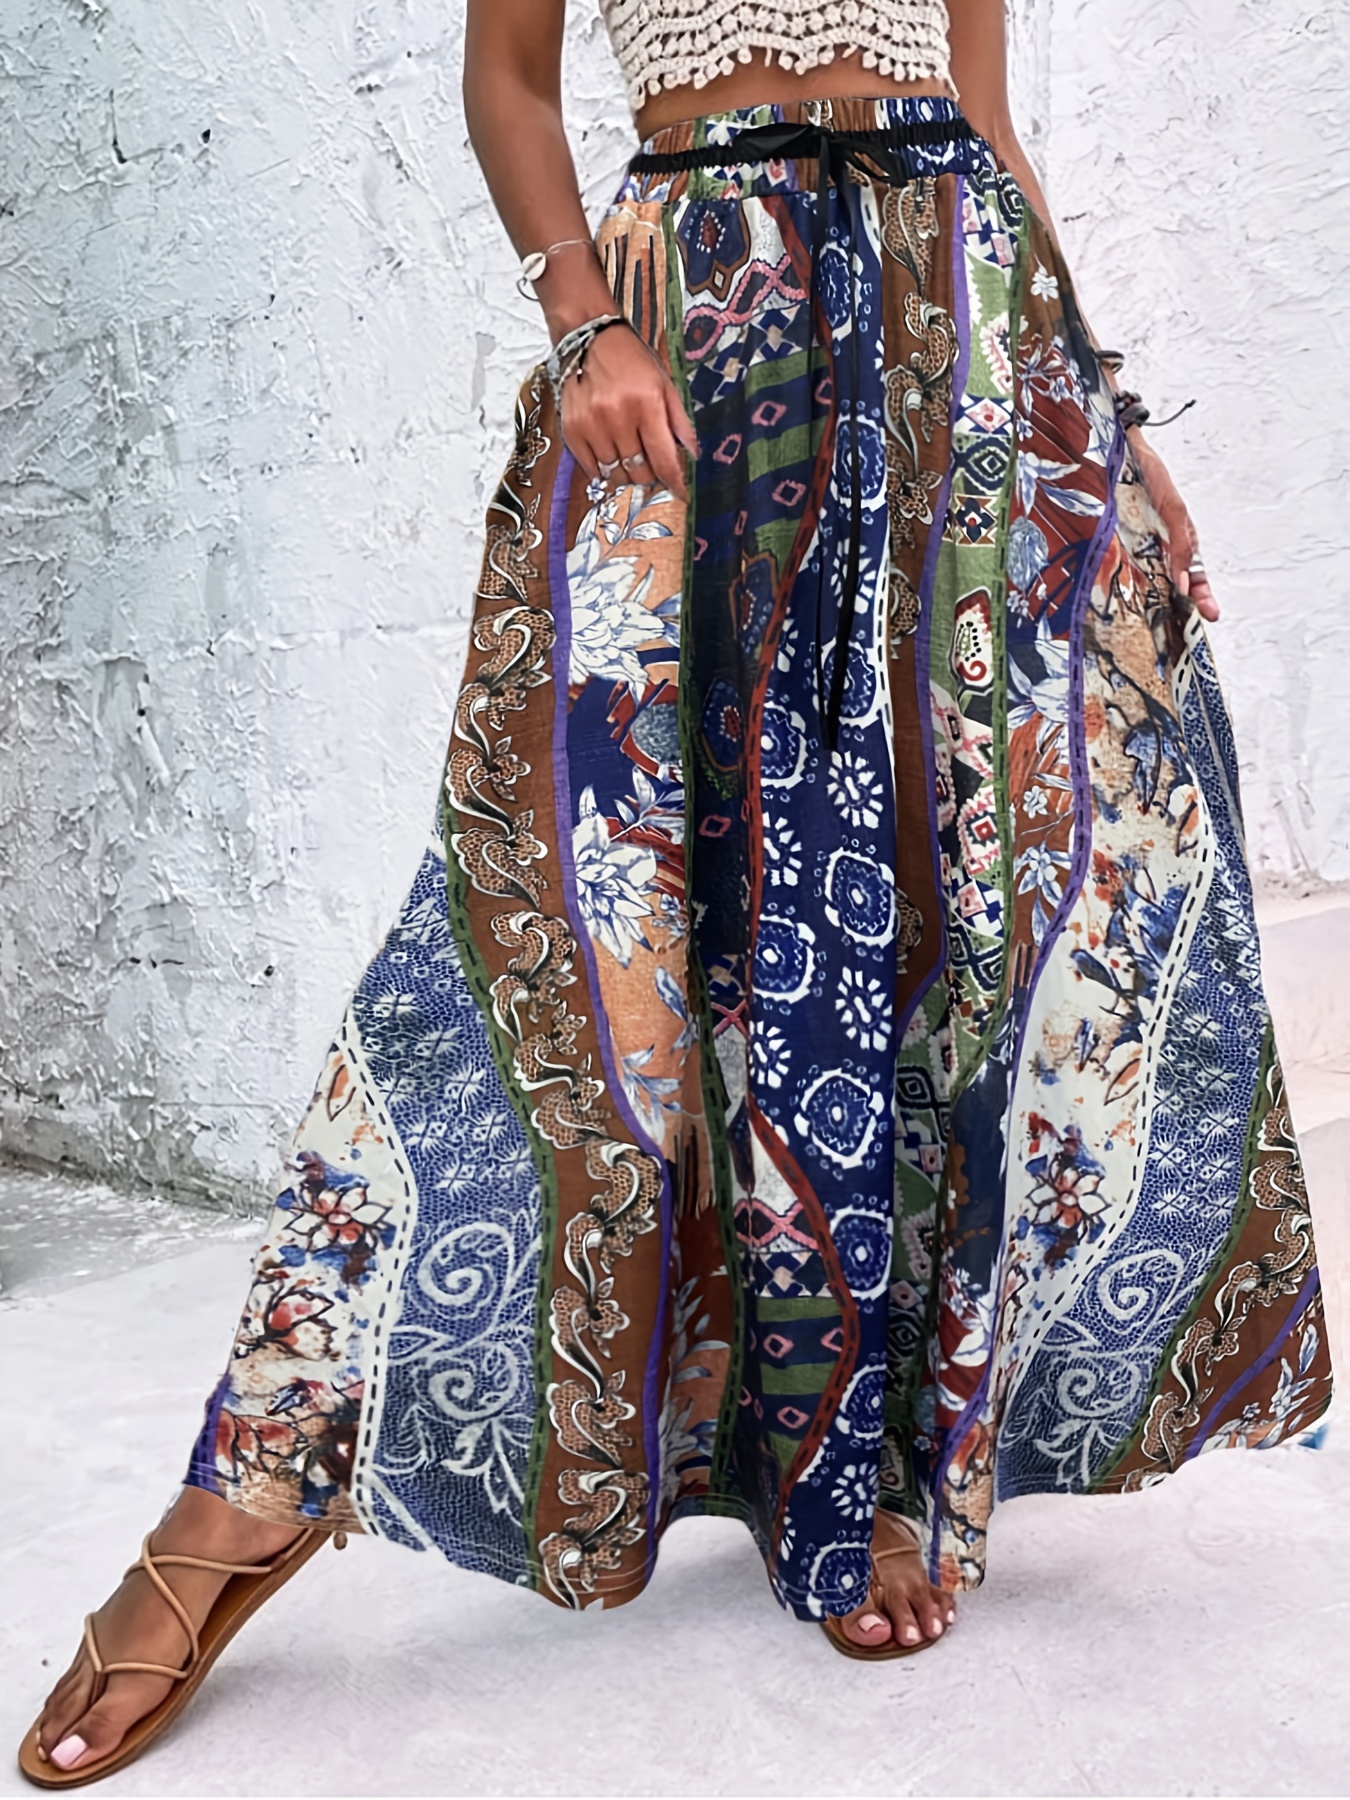 Floral Print Tie Waist Skirt, Casual Skirt For Spring & Fall, Women's ...